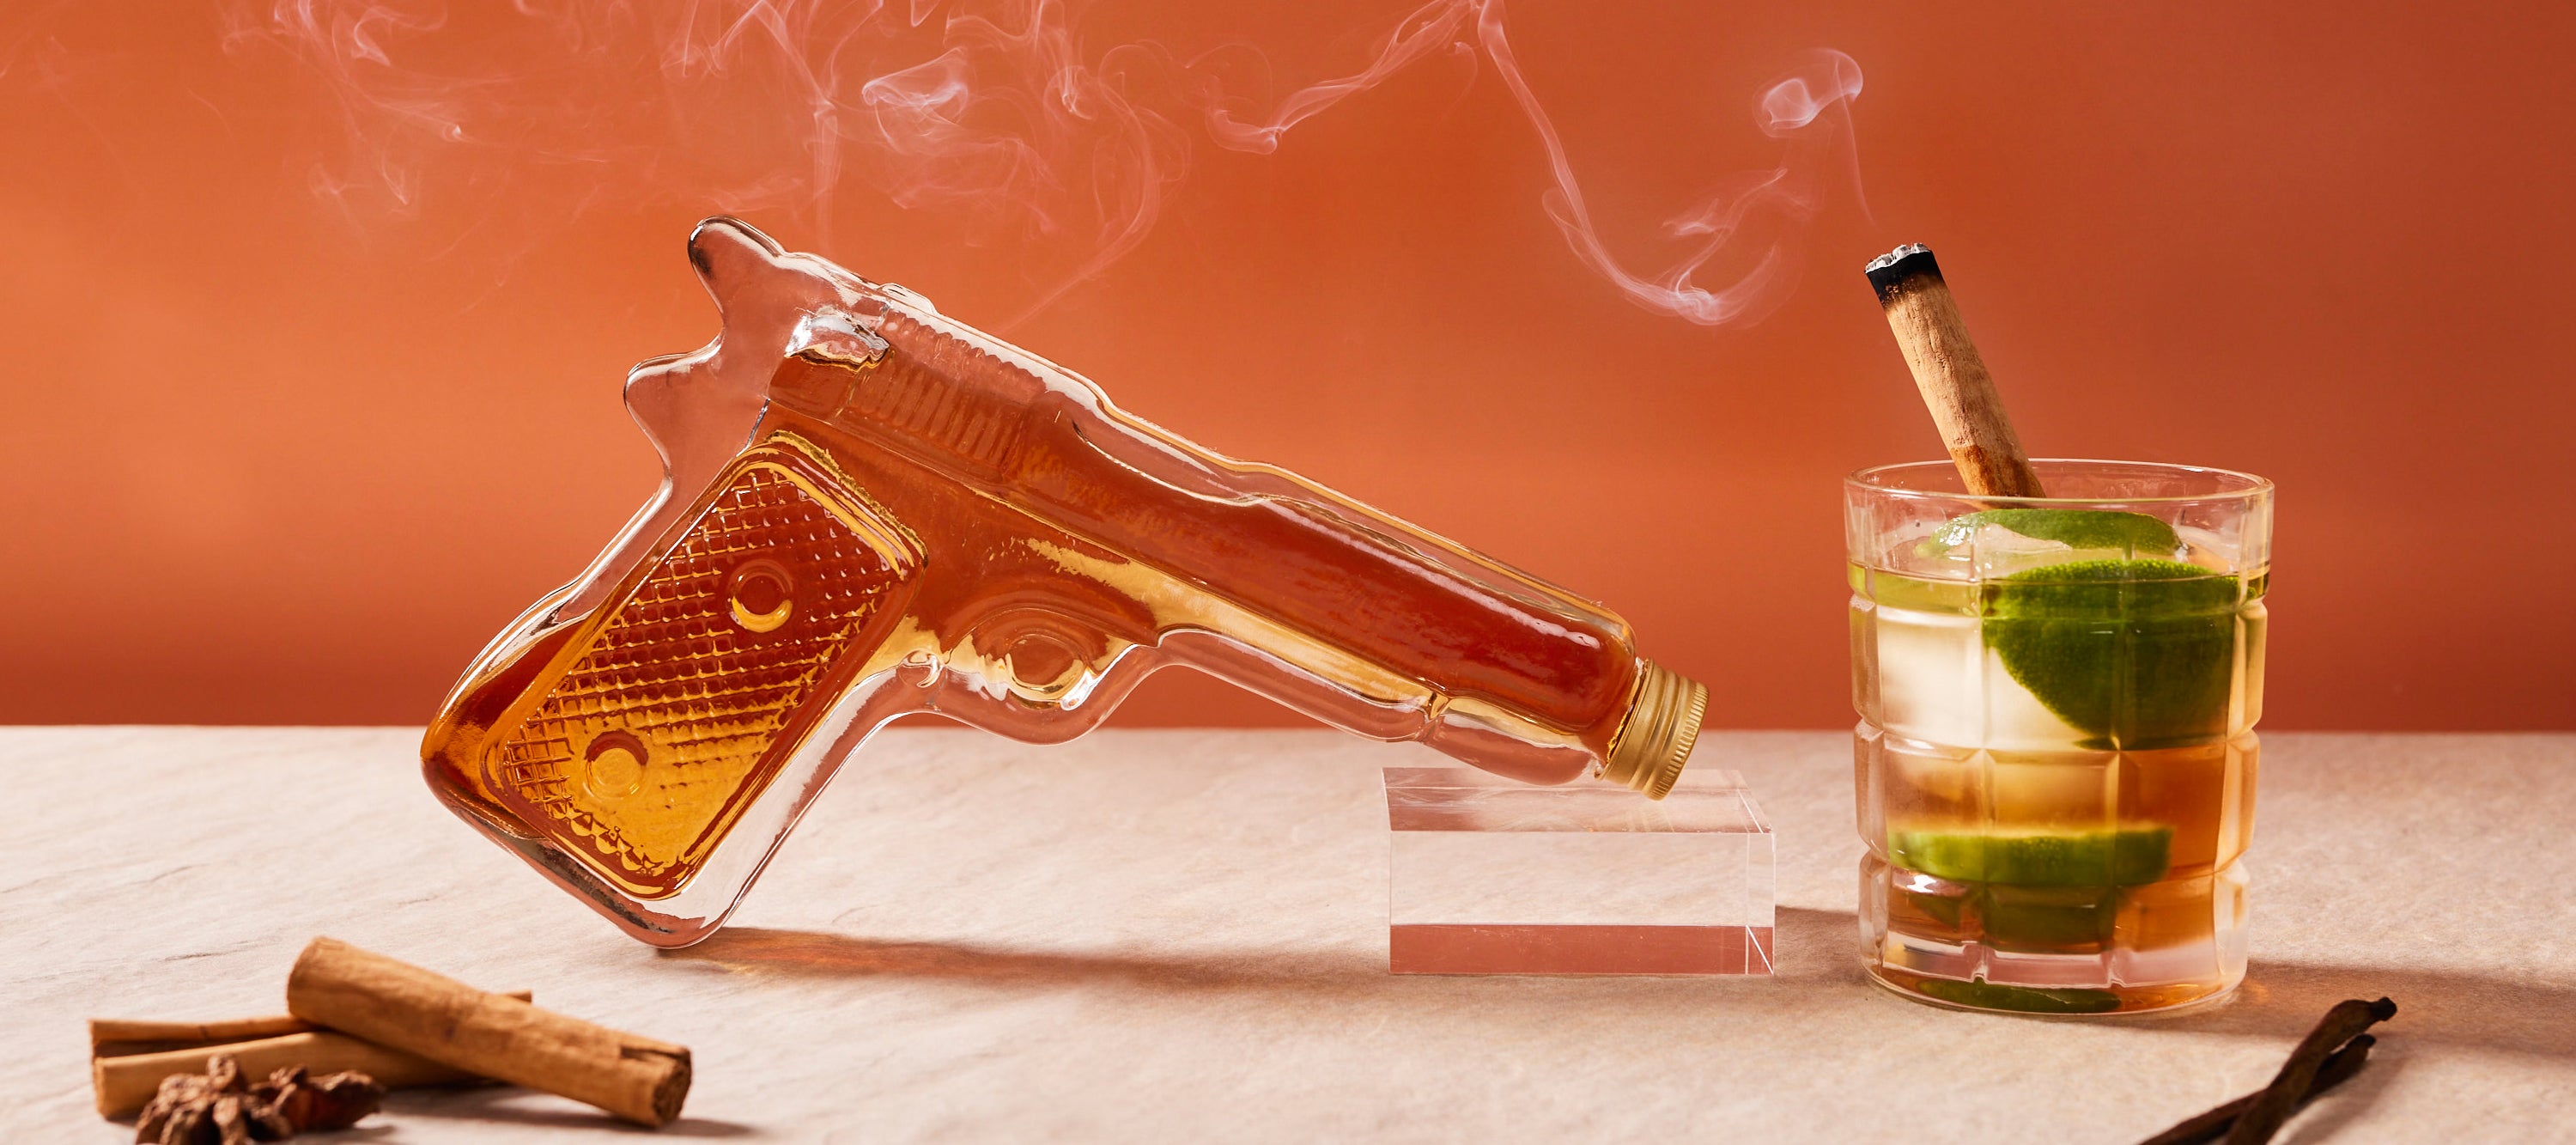 Unlock the Spirit of Adventure with Bundaberg Rum-filled Pistol Bottle